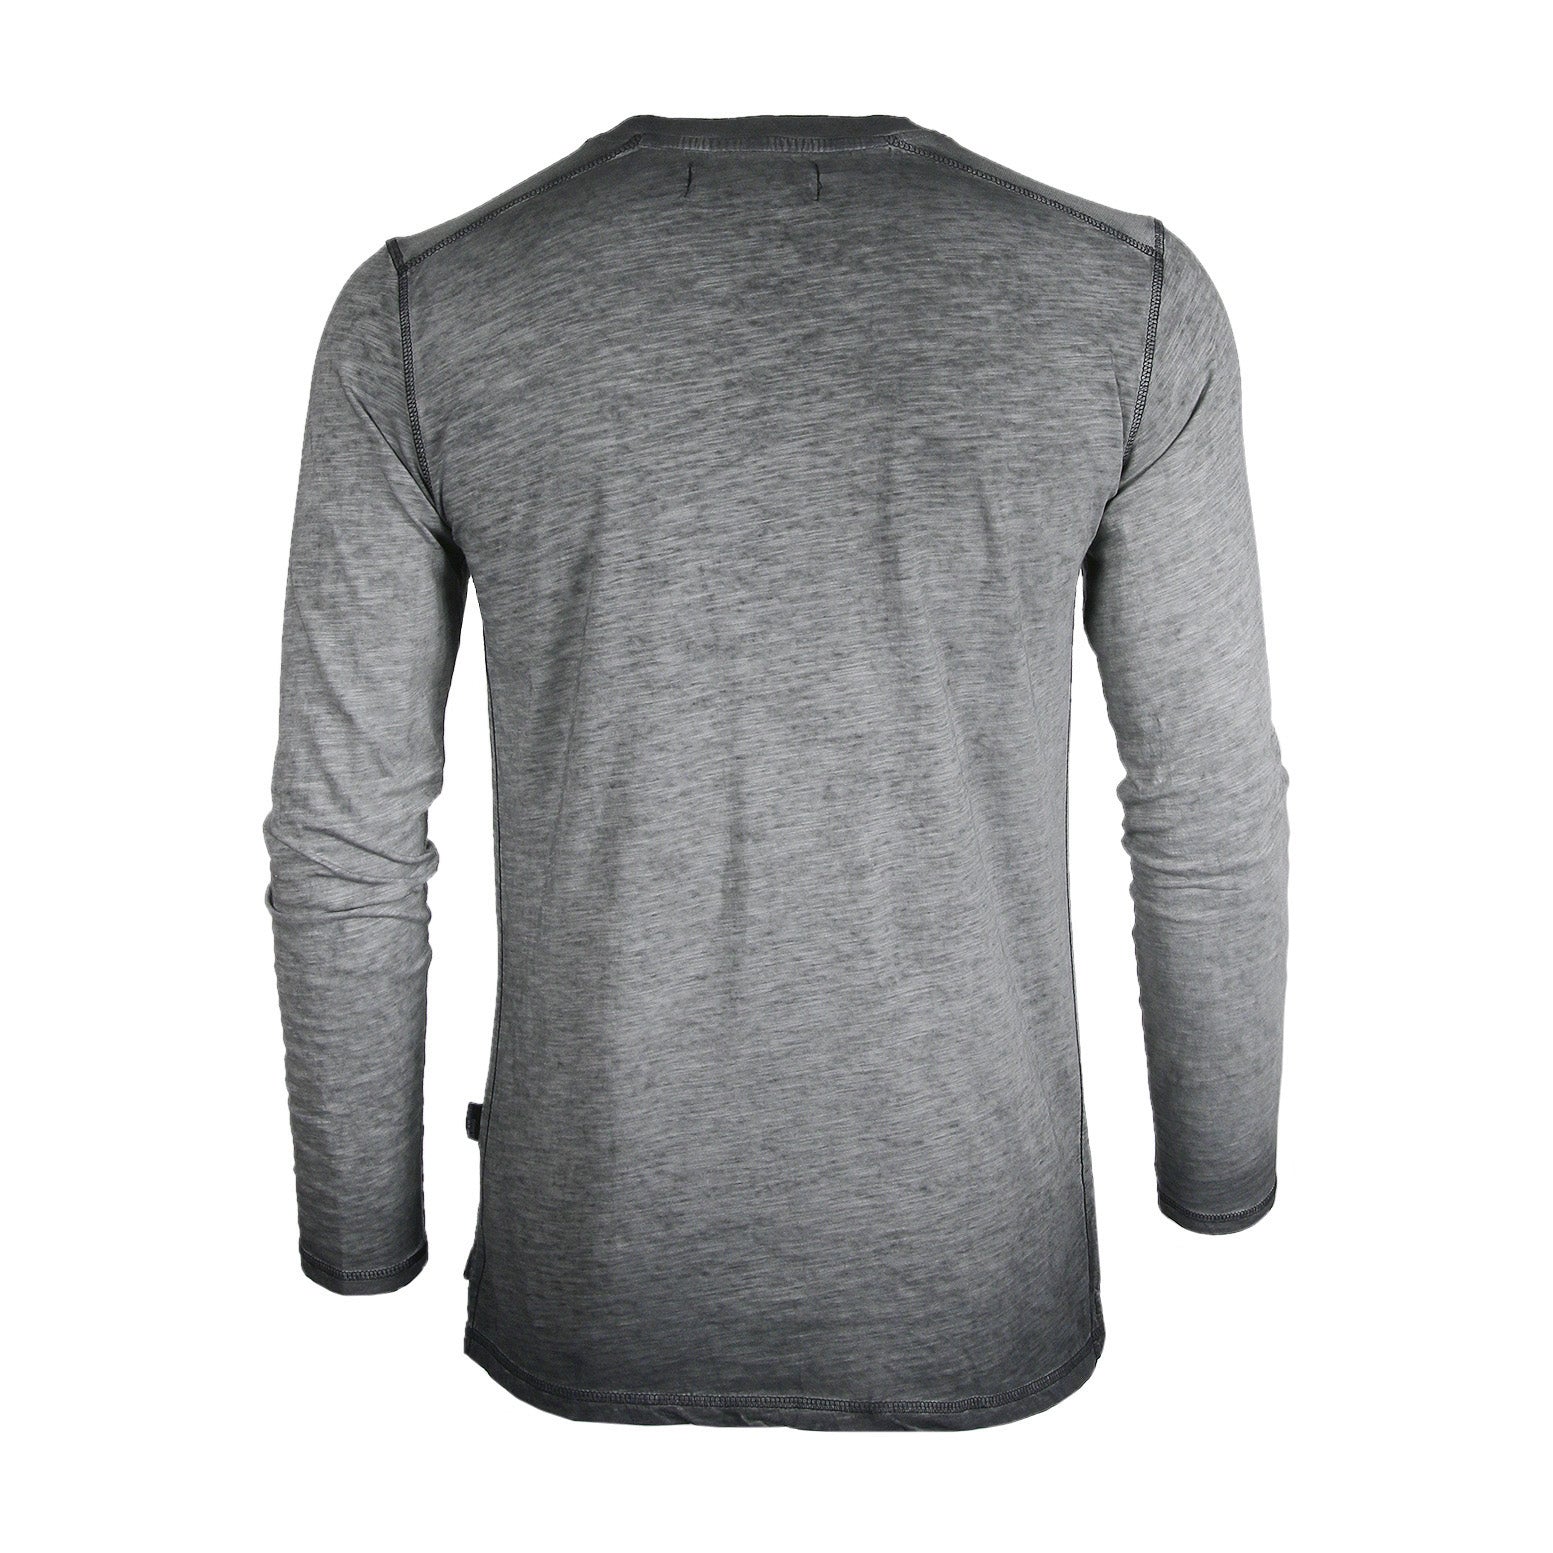 Dream Supply Long Sleeve V-Neck Oil Wash Vintage Shirt Charcoal - Team Spirit Store USA 